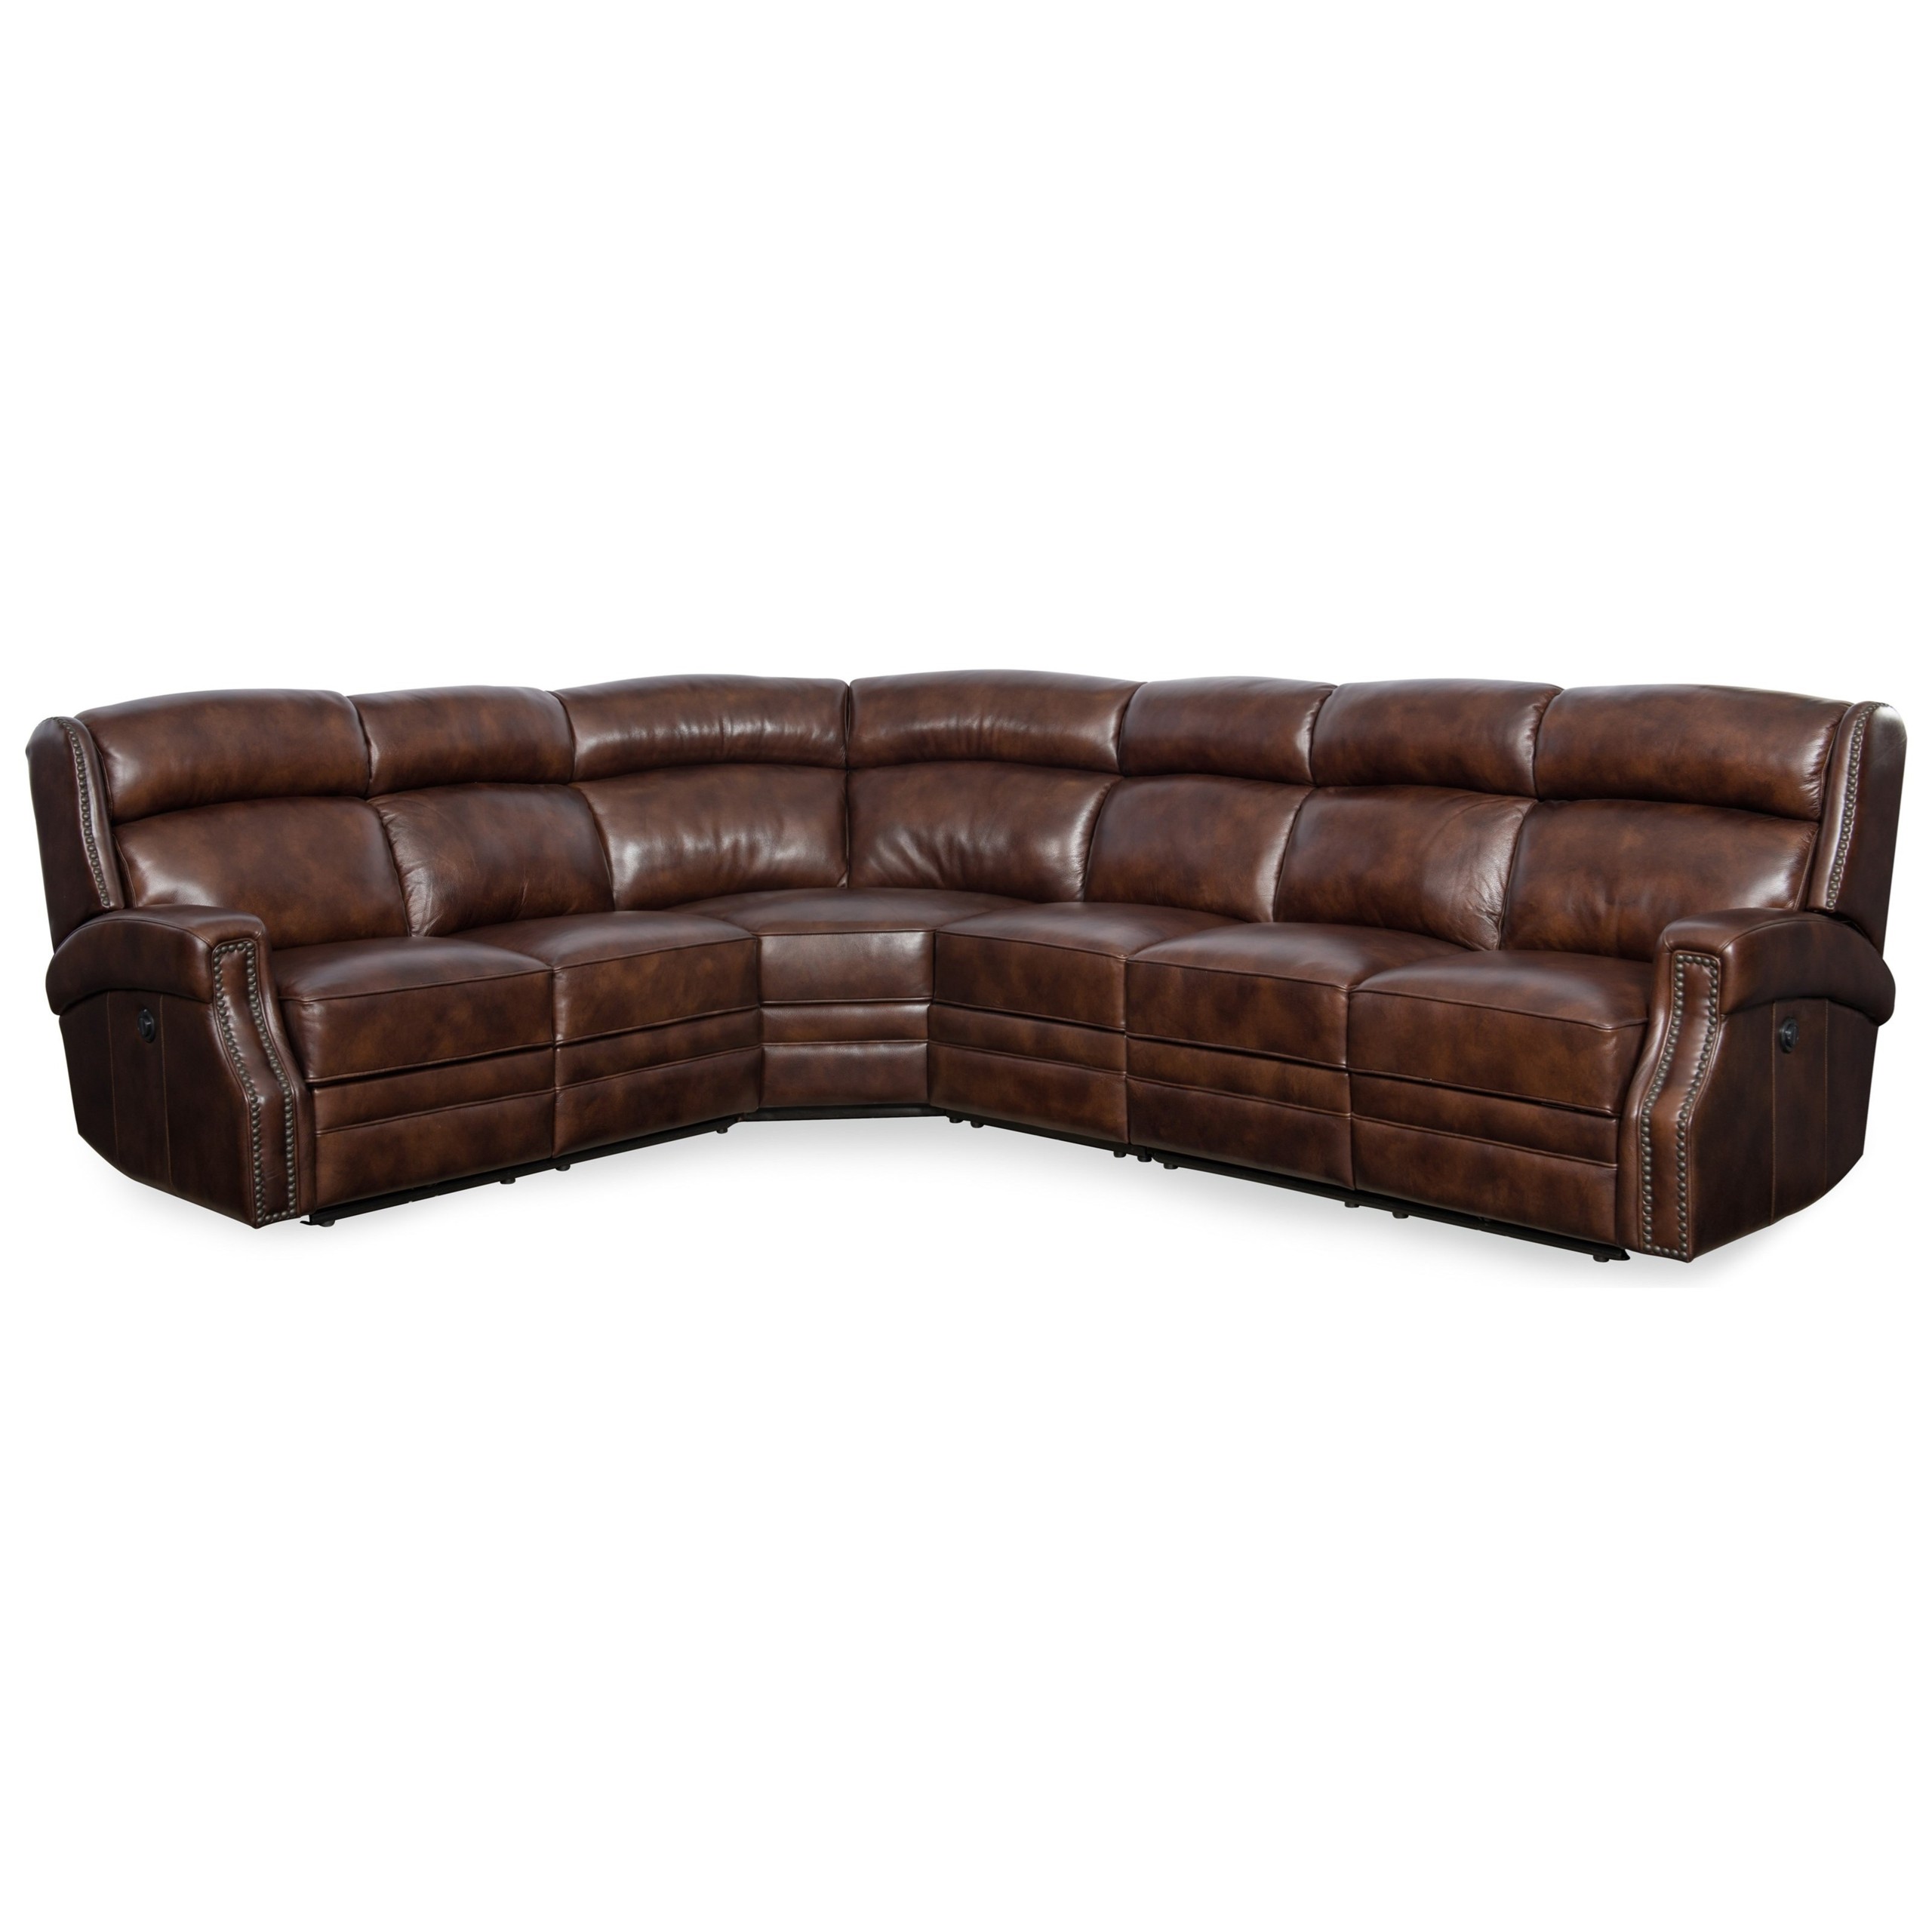 Hooker furniture carlisle ss460 ps 188 power reclining